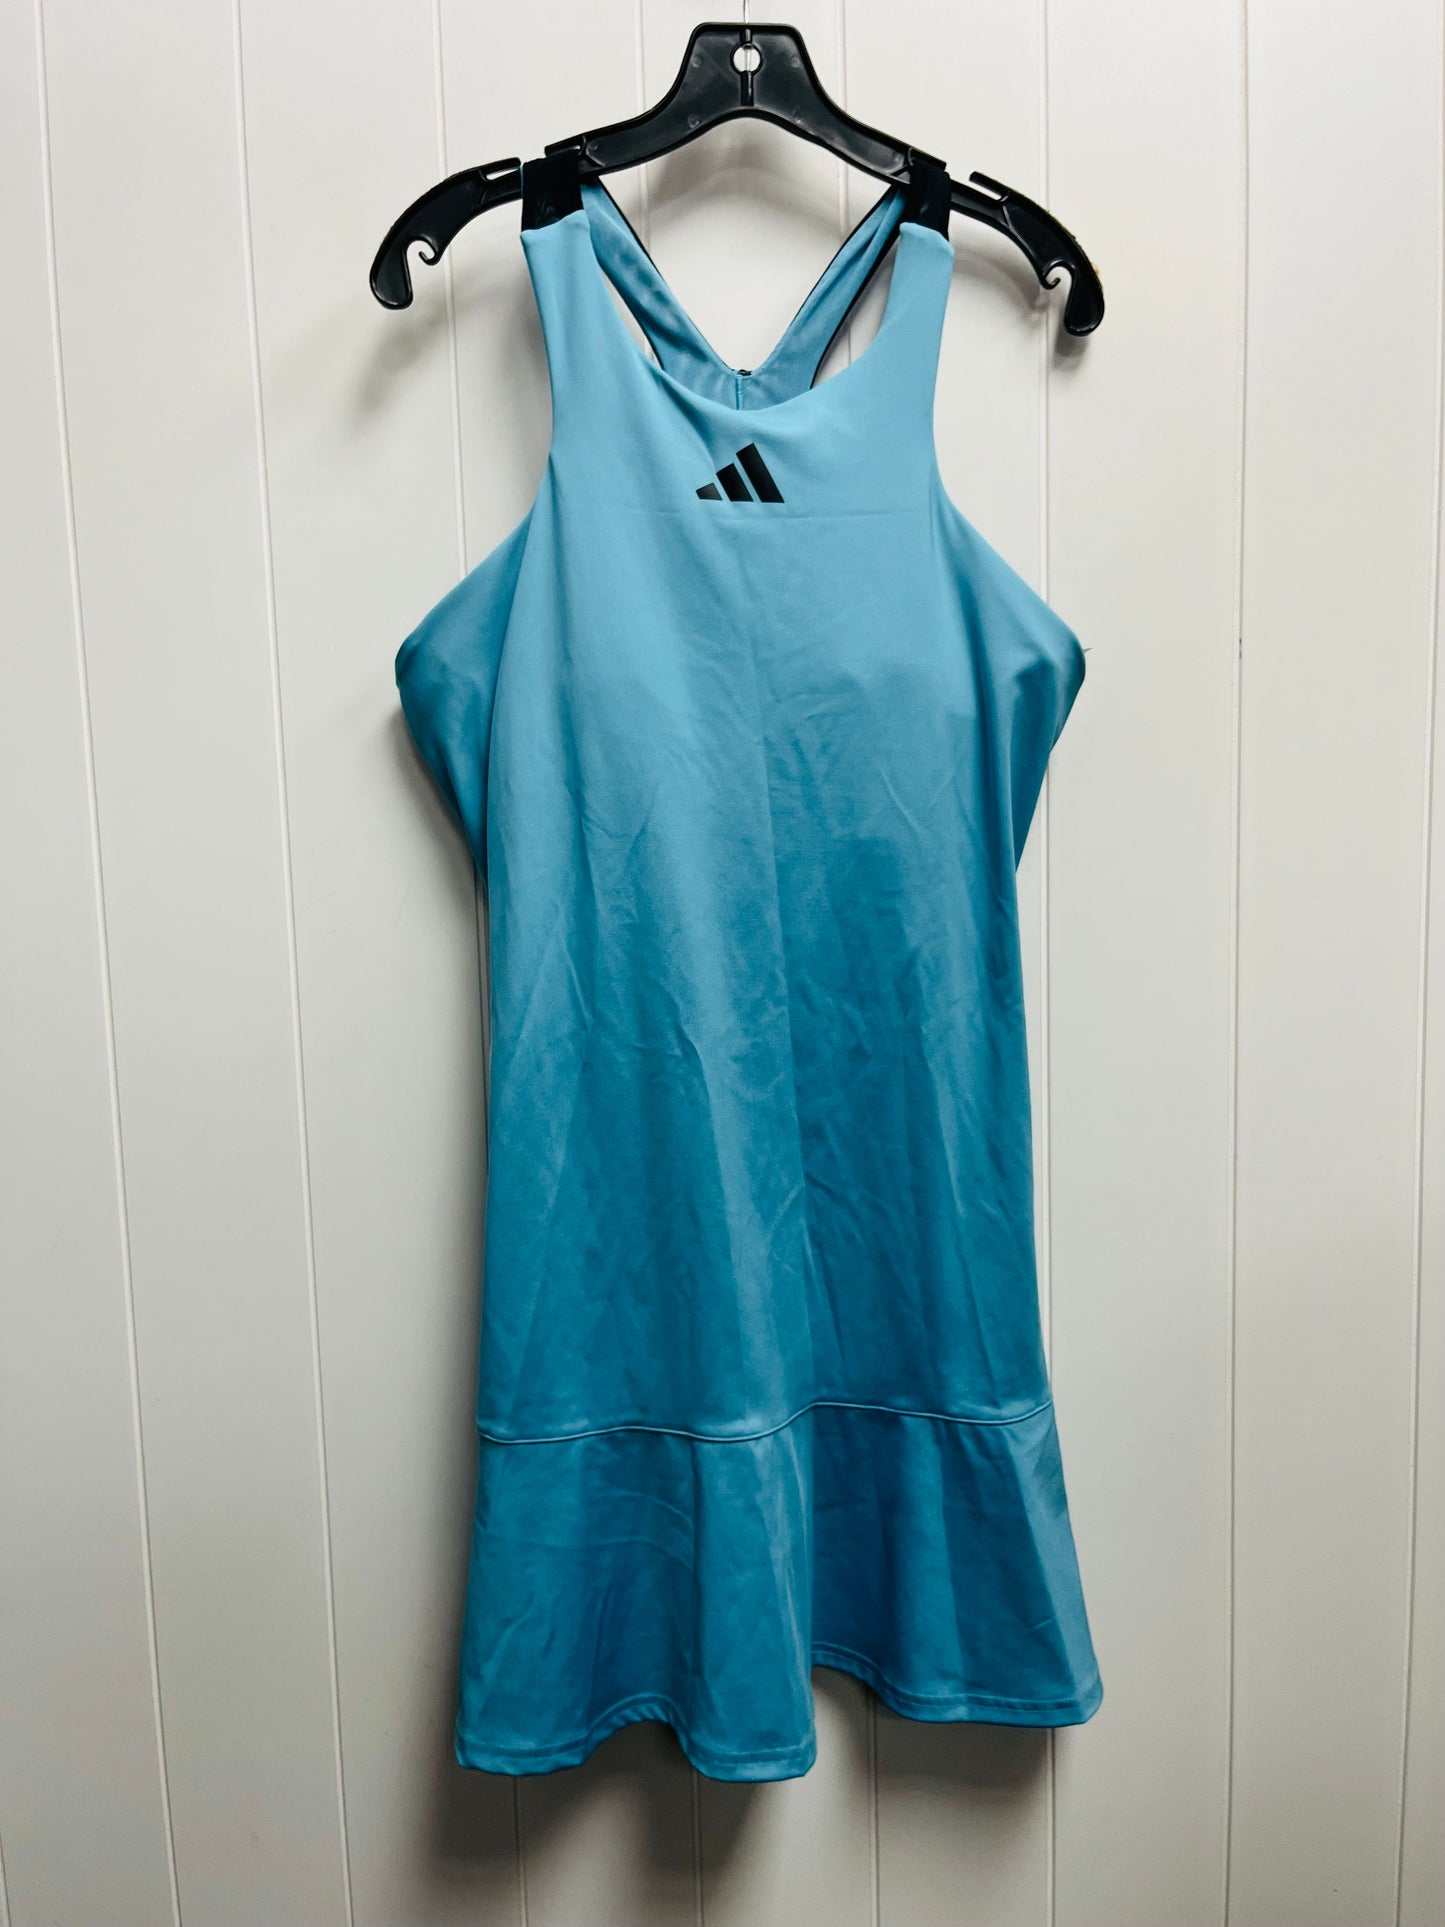 Blue Athletic Dress Adidas, Size L